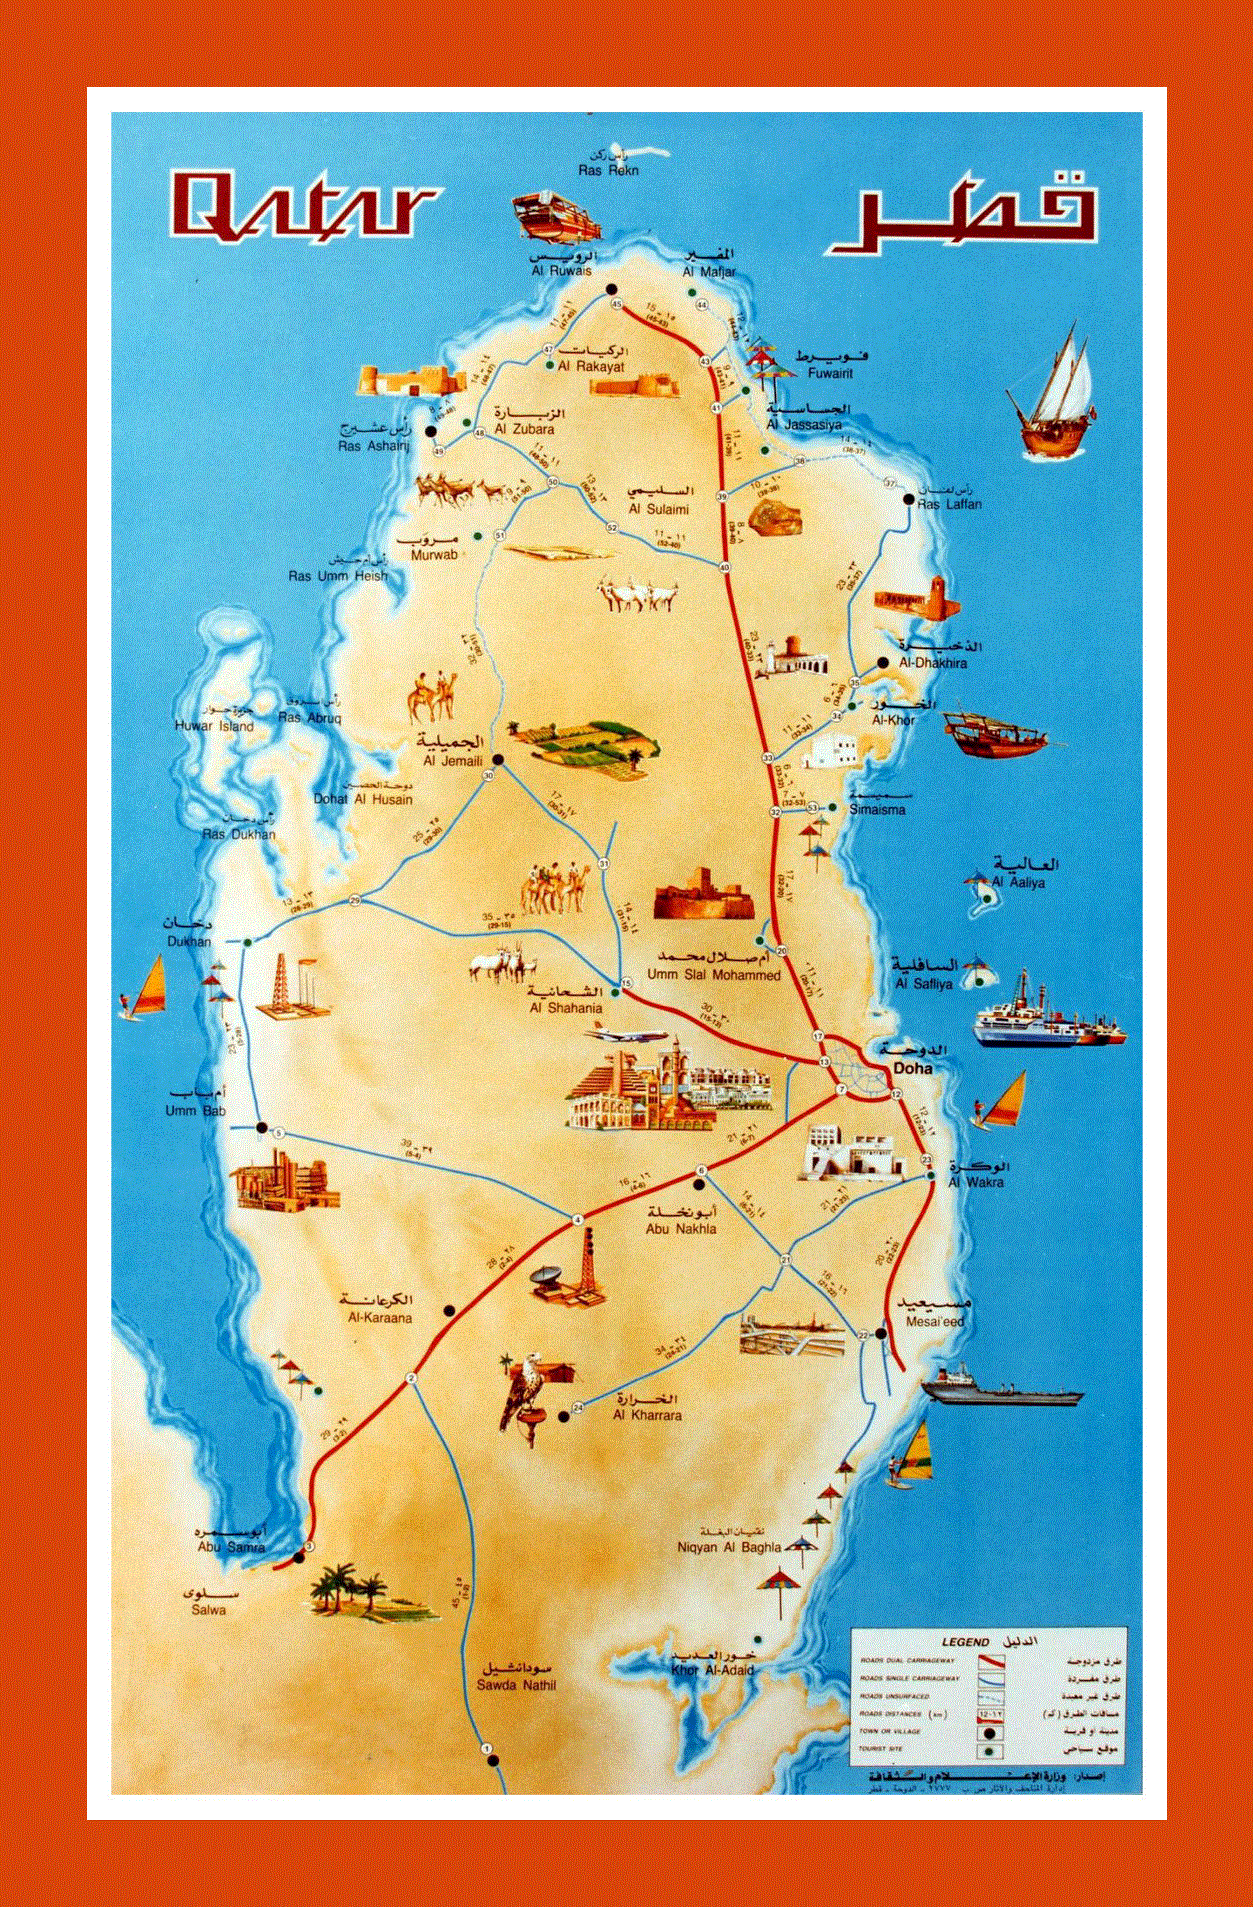 Tourist illustrated map of Qatar